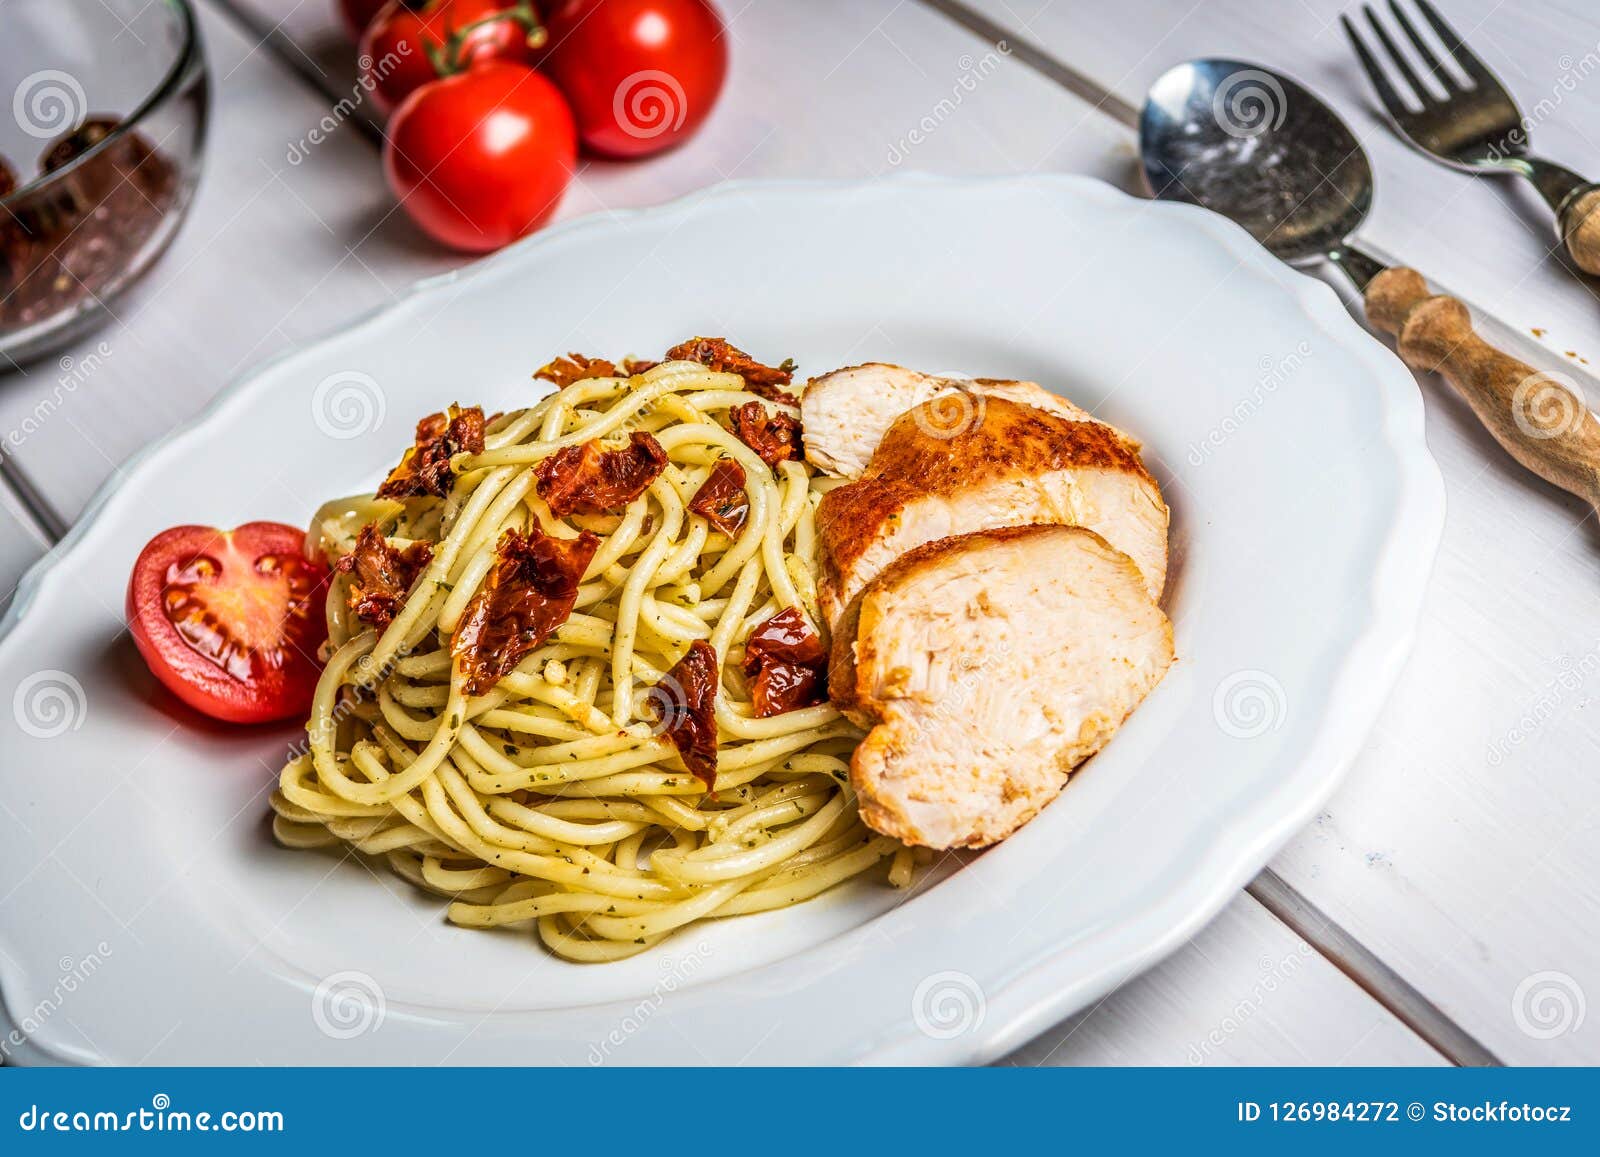 Italian Spaghetti with Chicken and Sundried Tomato Stock Photo - Image ...